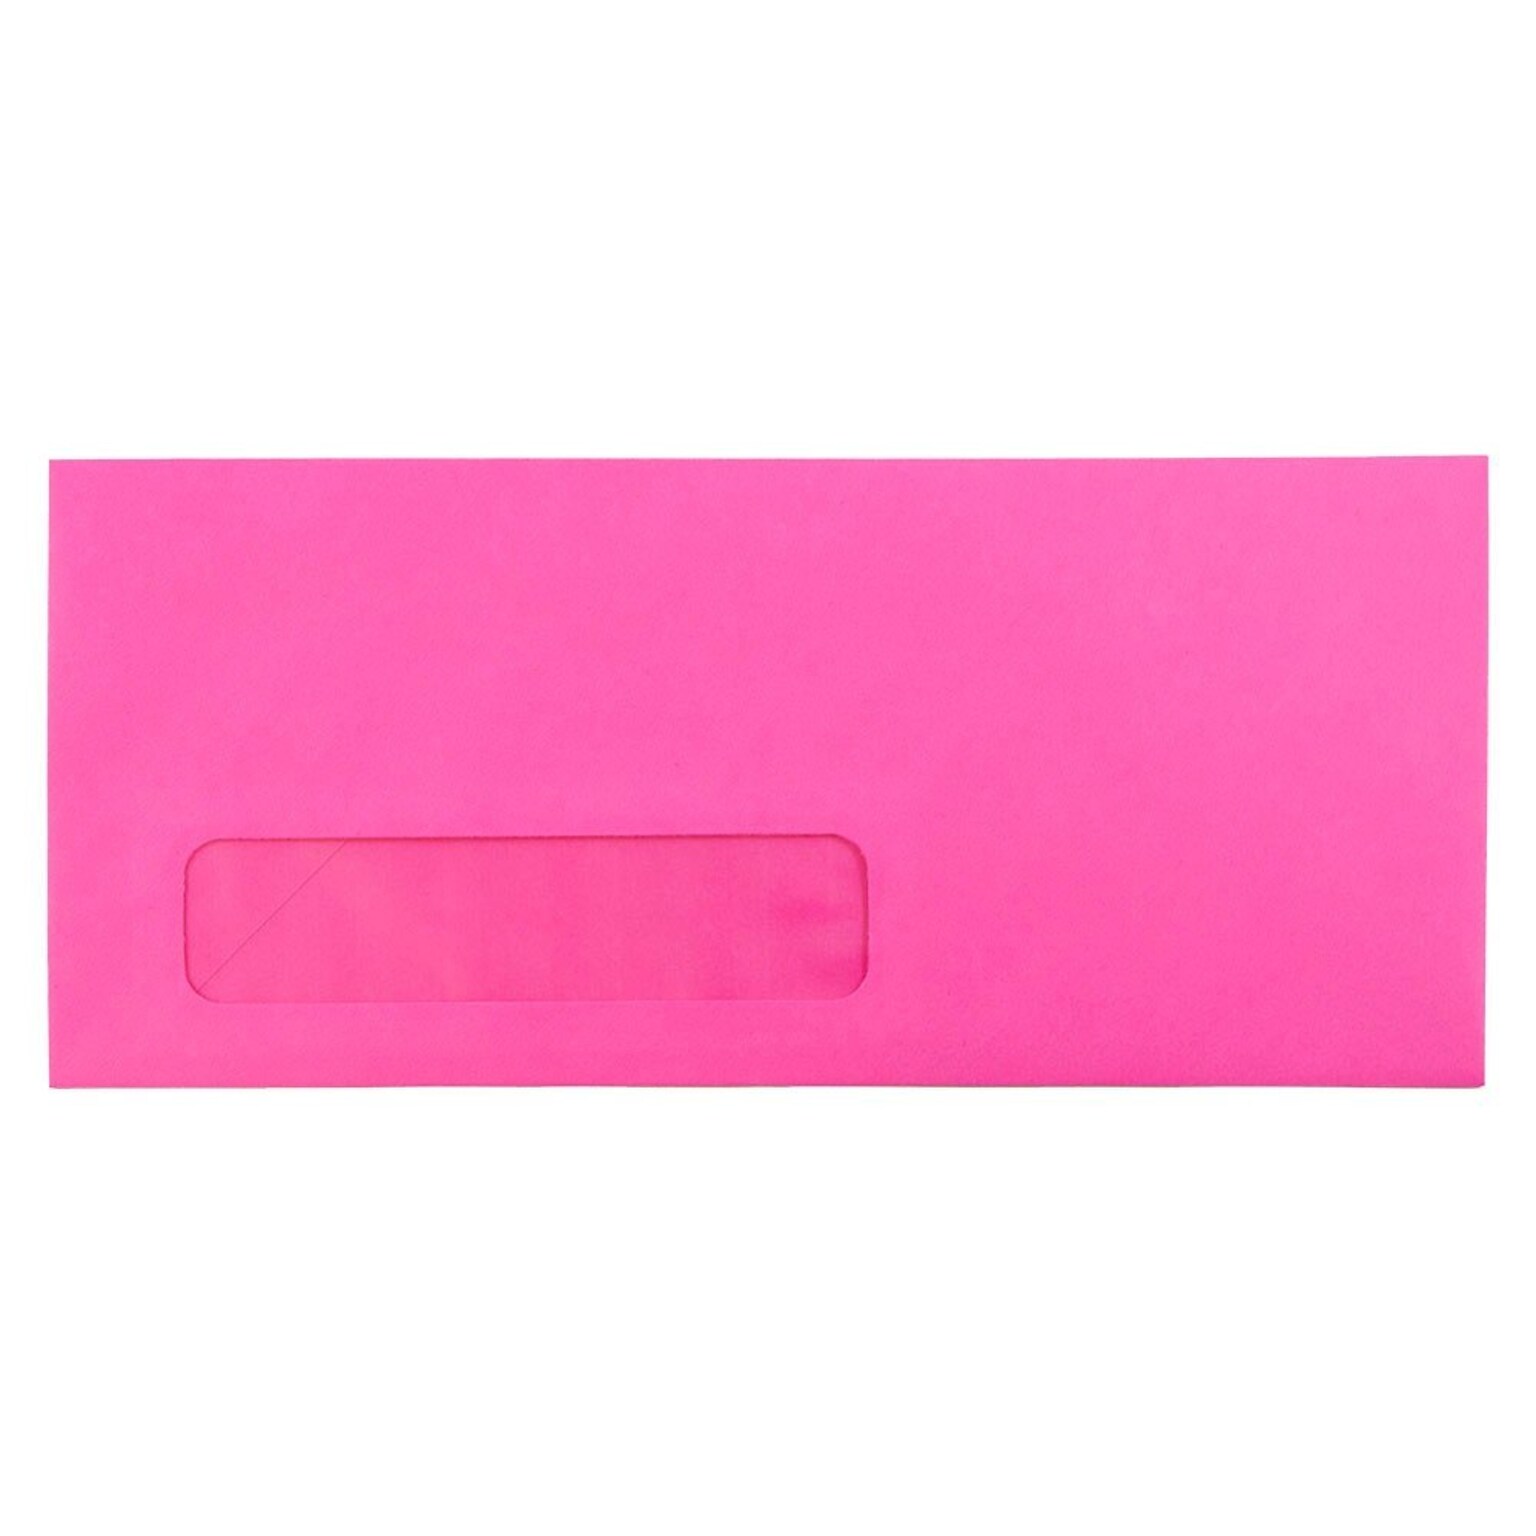 JAM Paper #10 Business Window Envelope, 4 1/8 x 9 1/2, Ultra Fuchsia Pink, 50/Pack (5156479I)